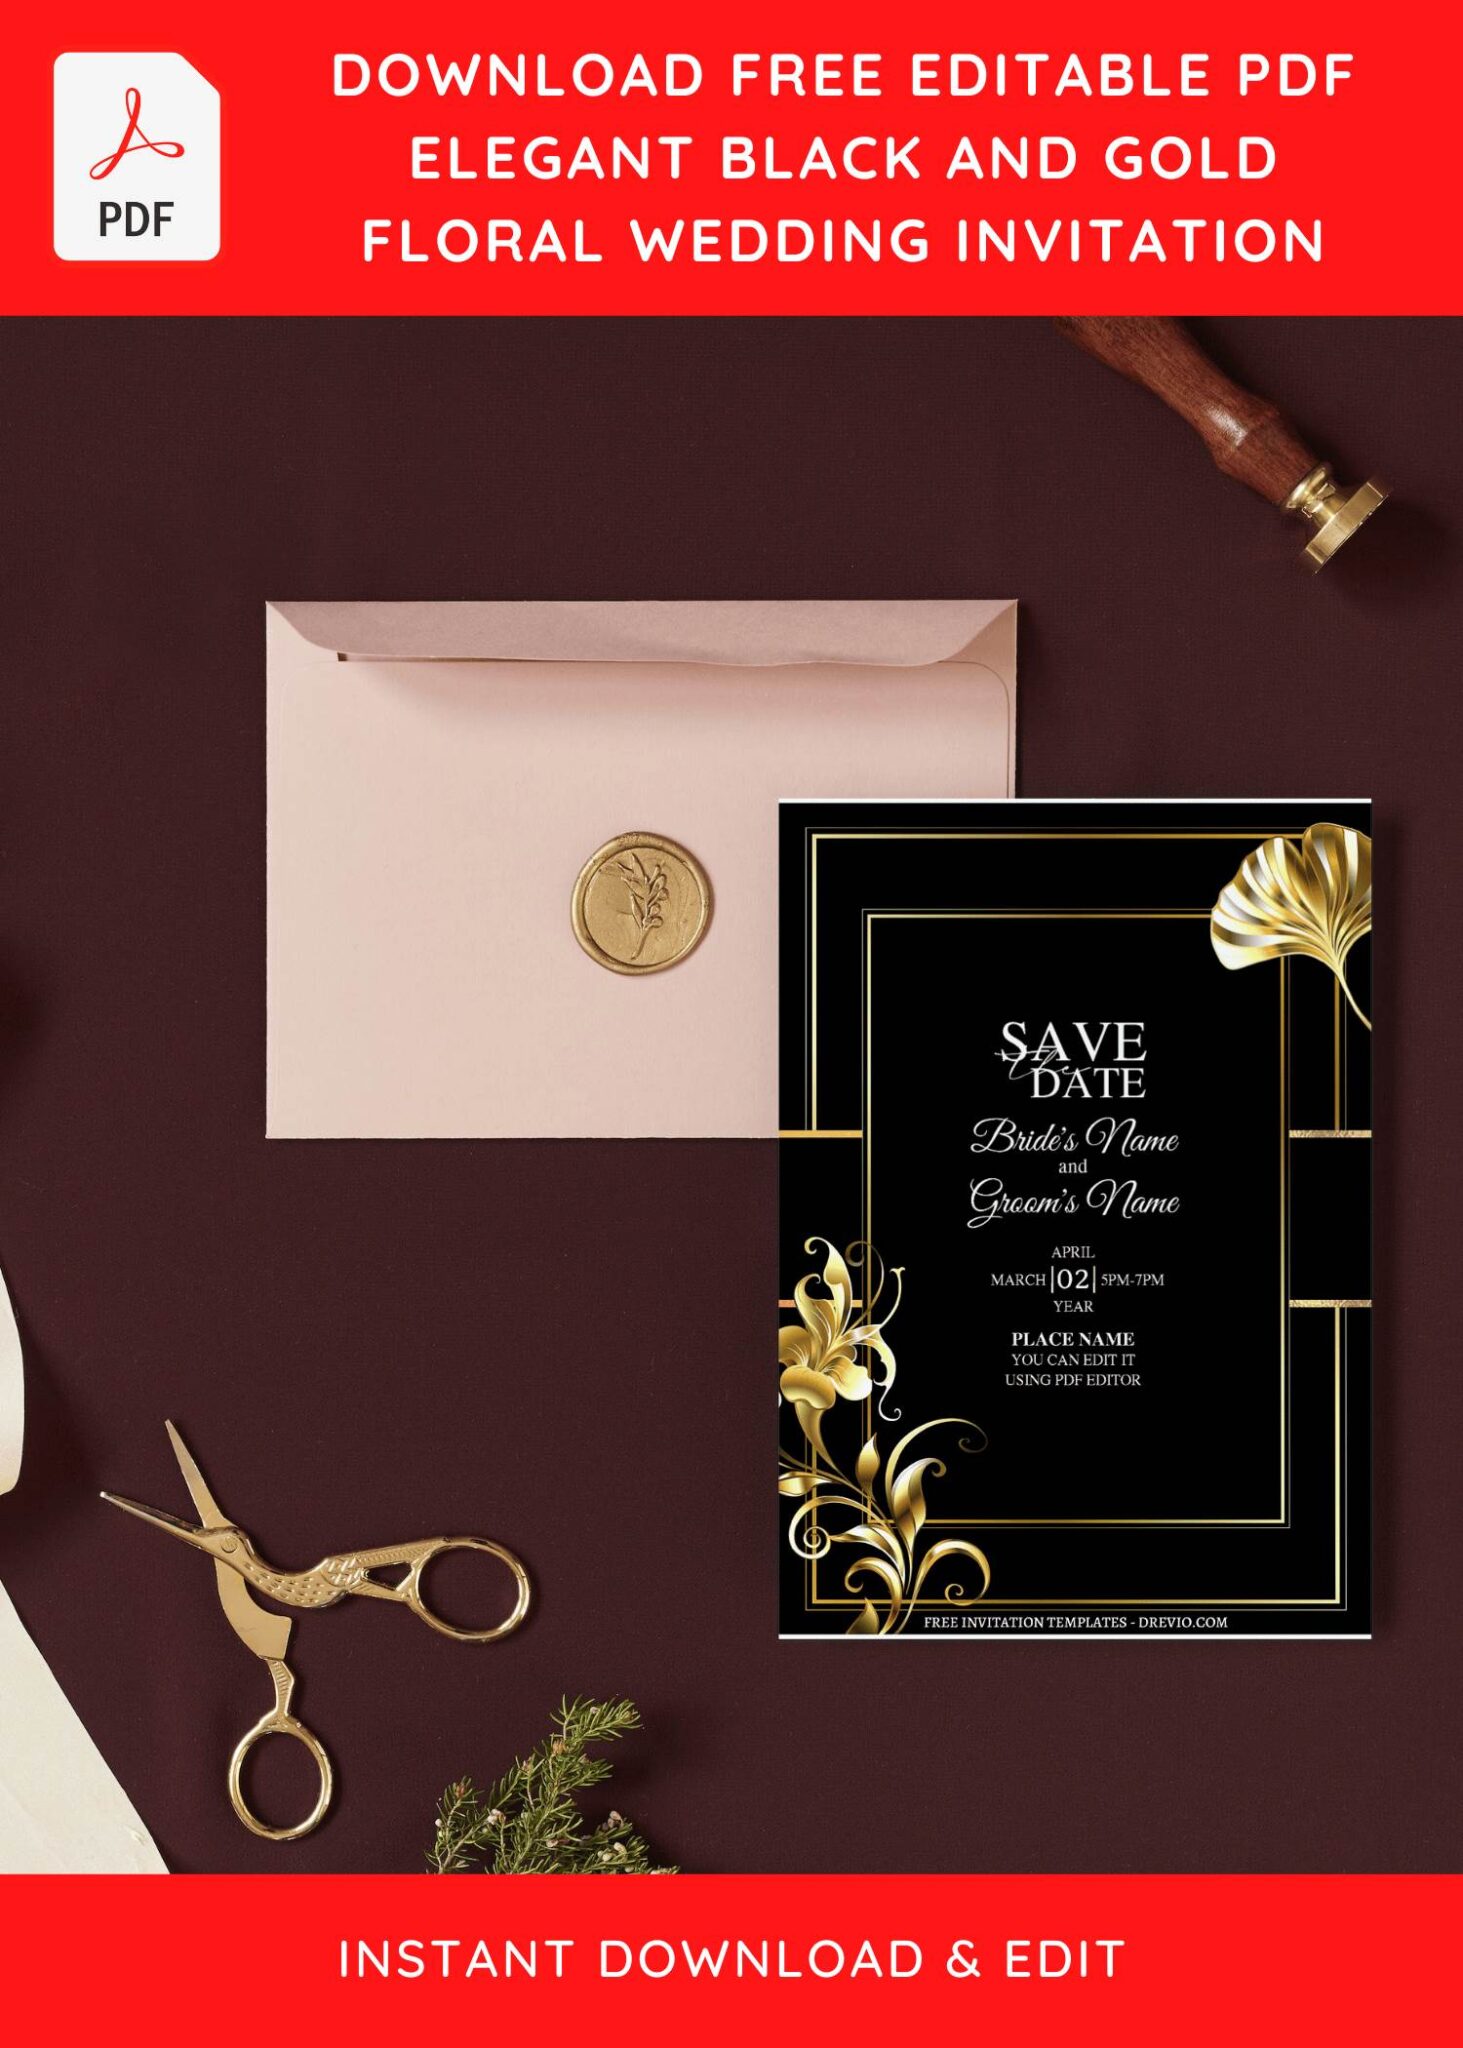 (Free Editable PDF) Luxury Black And Gold Floral Wedding Invitation